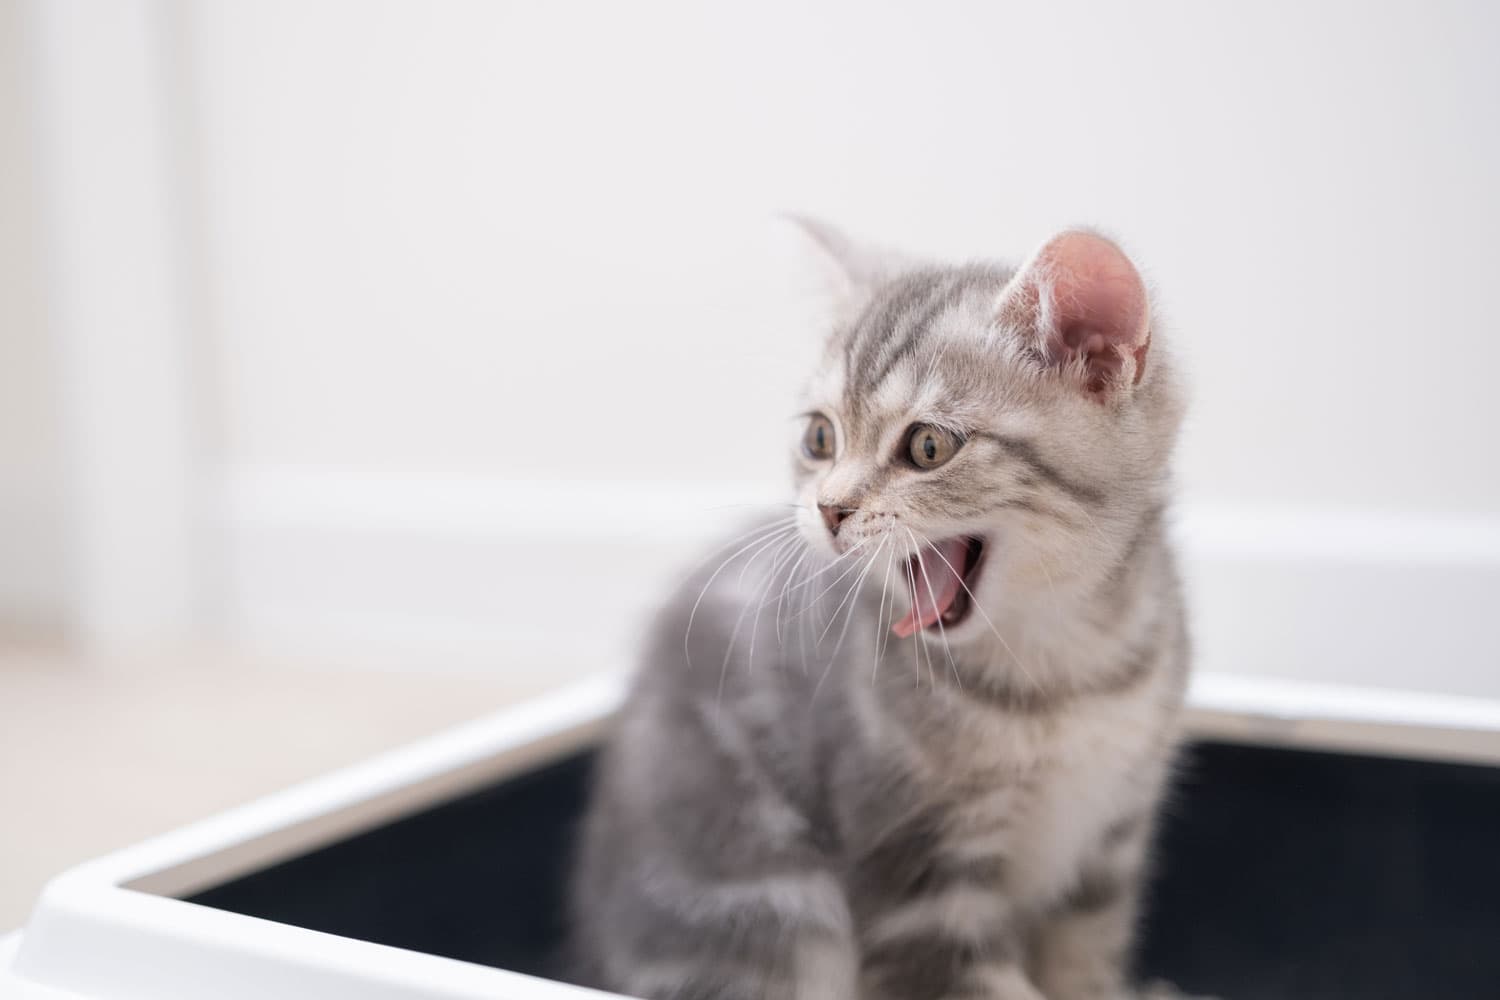 A cute tabby cat yawning